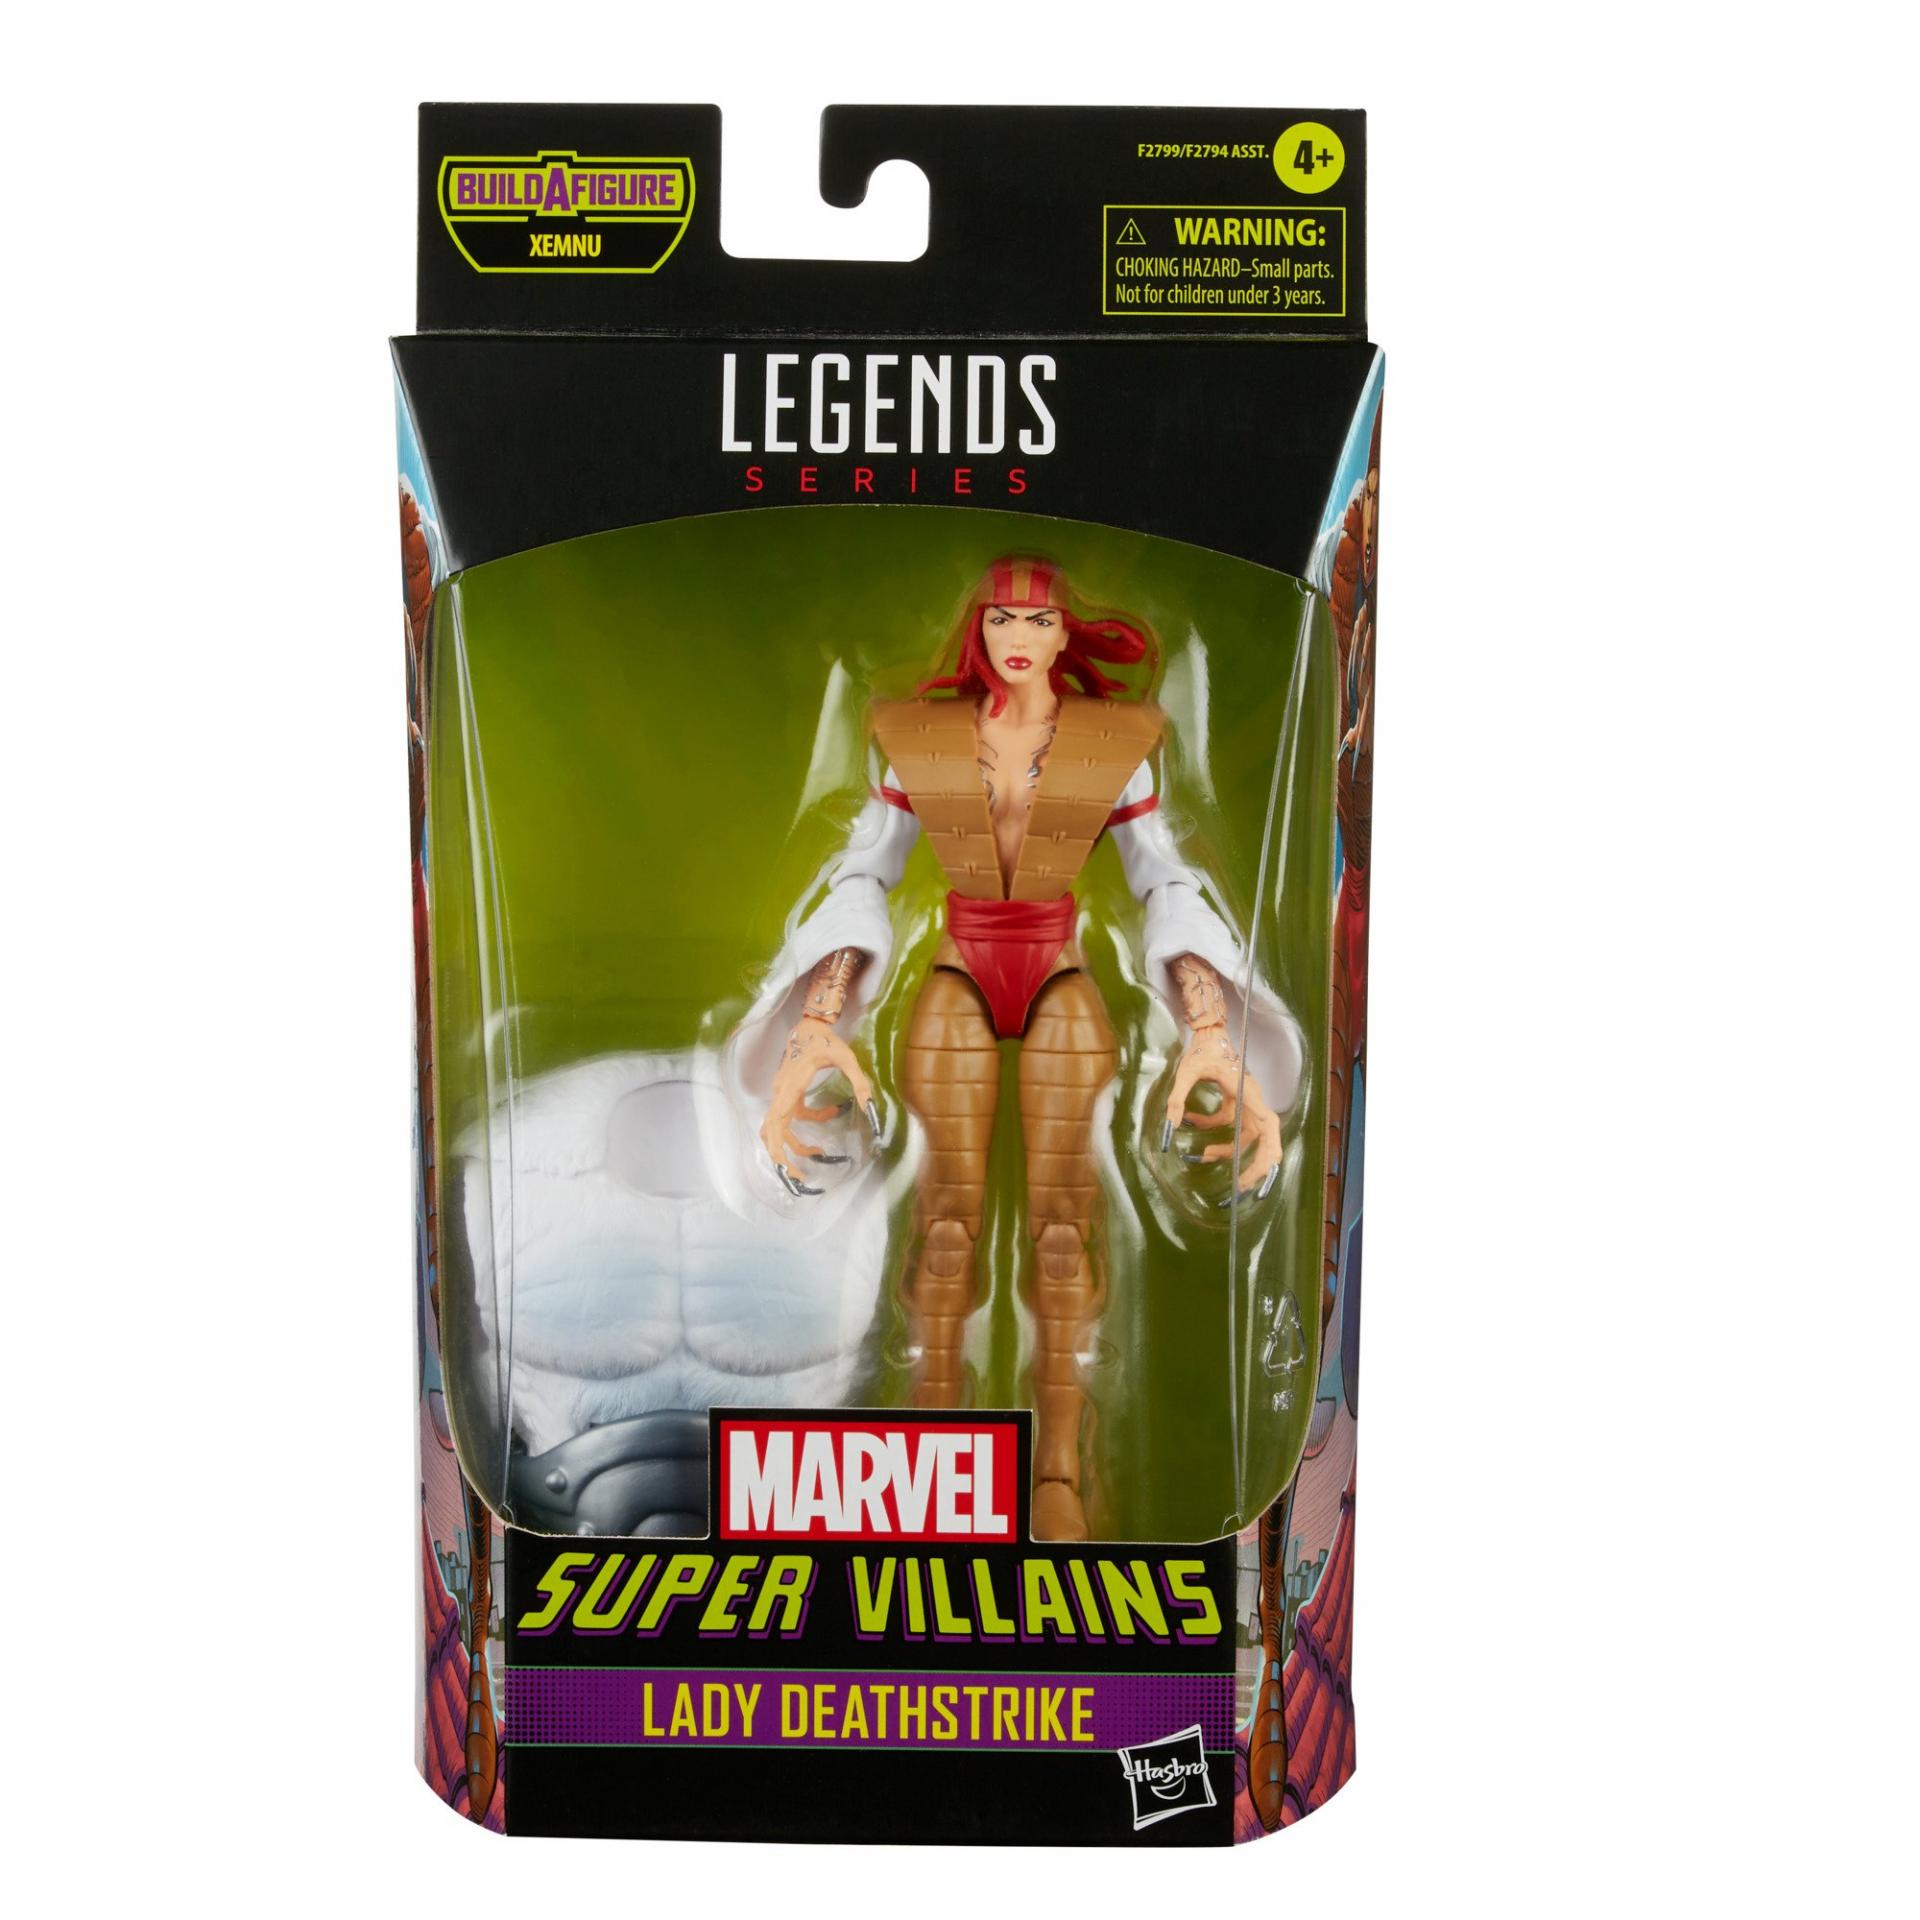 Marvel legends series hasbro lady deathstrike